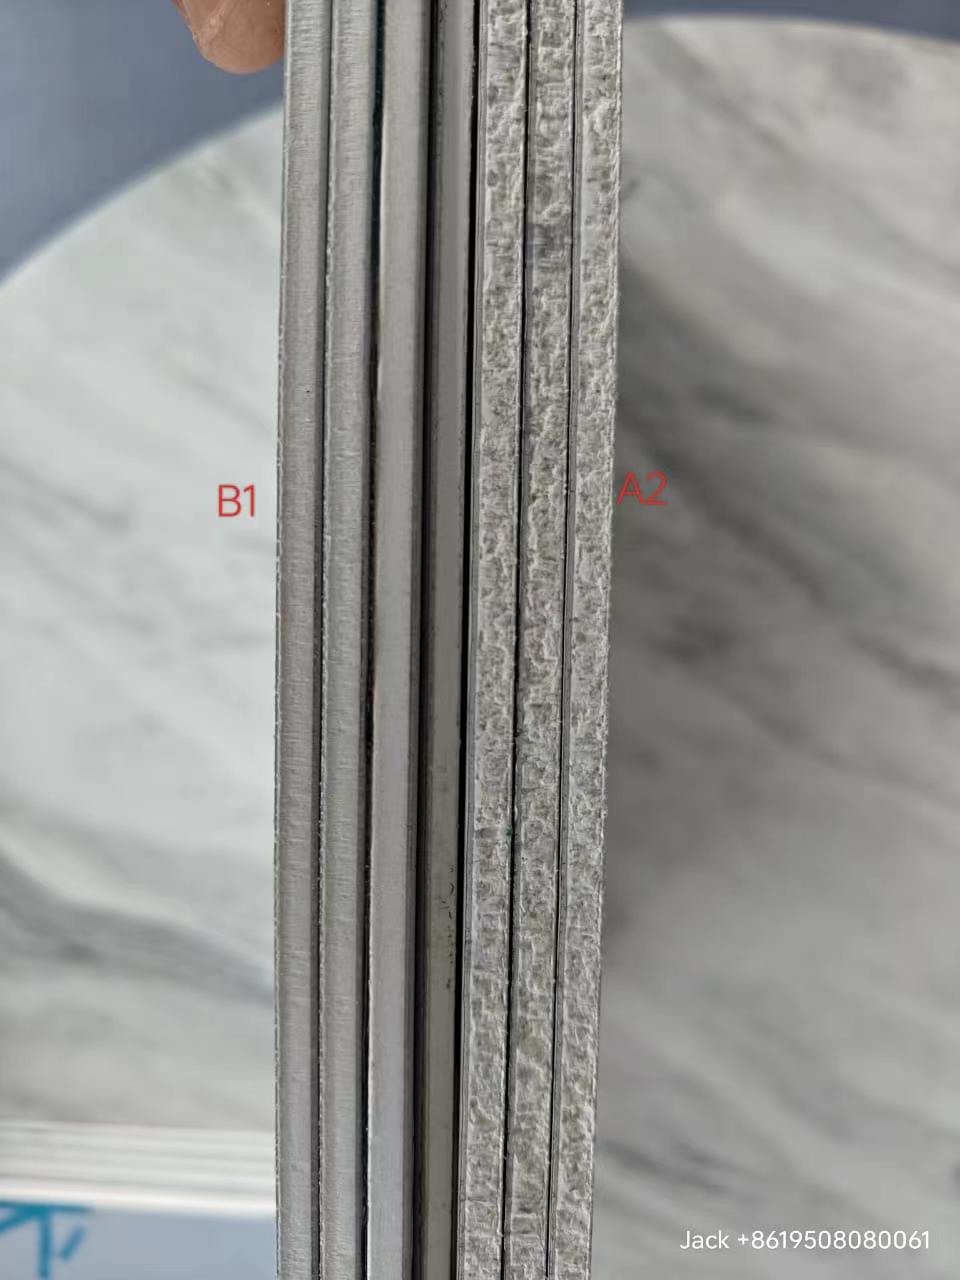 B1 Fireproof Aluminum Composite Panel Wall Panel Cladding